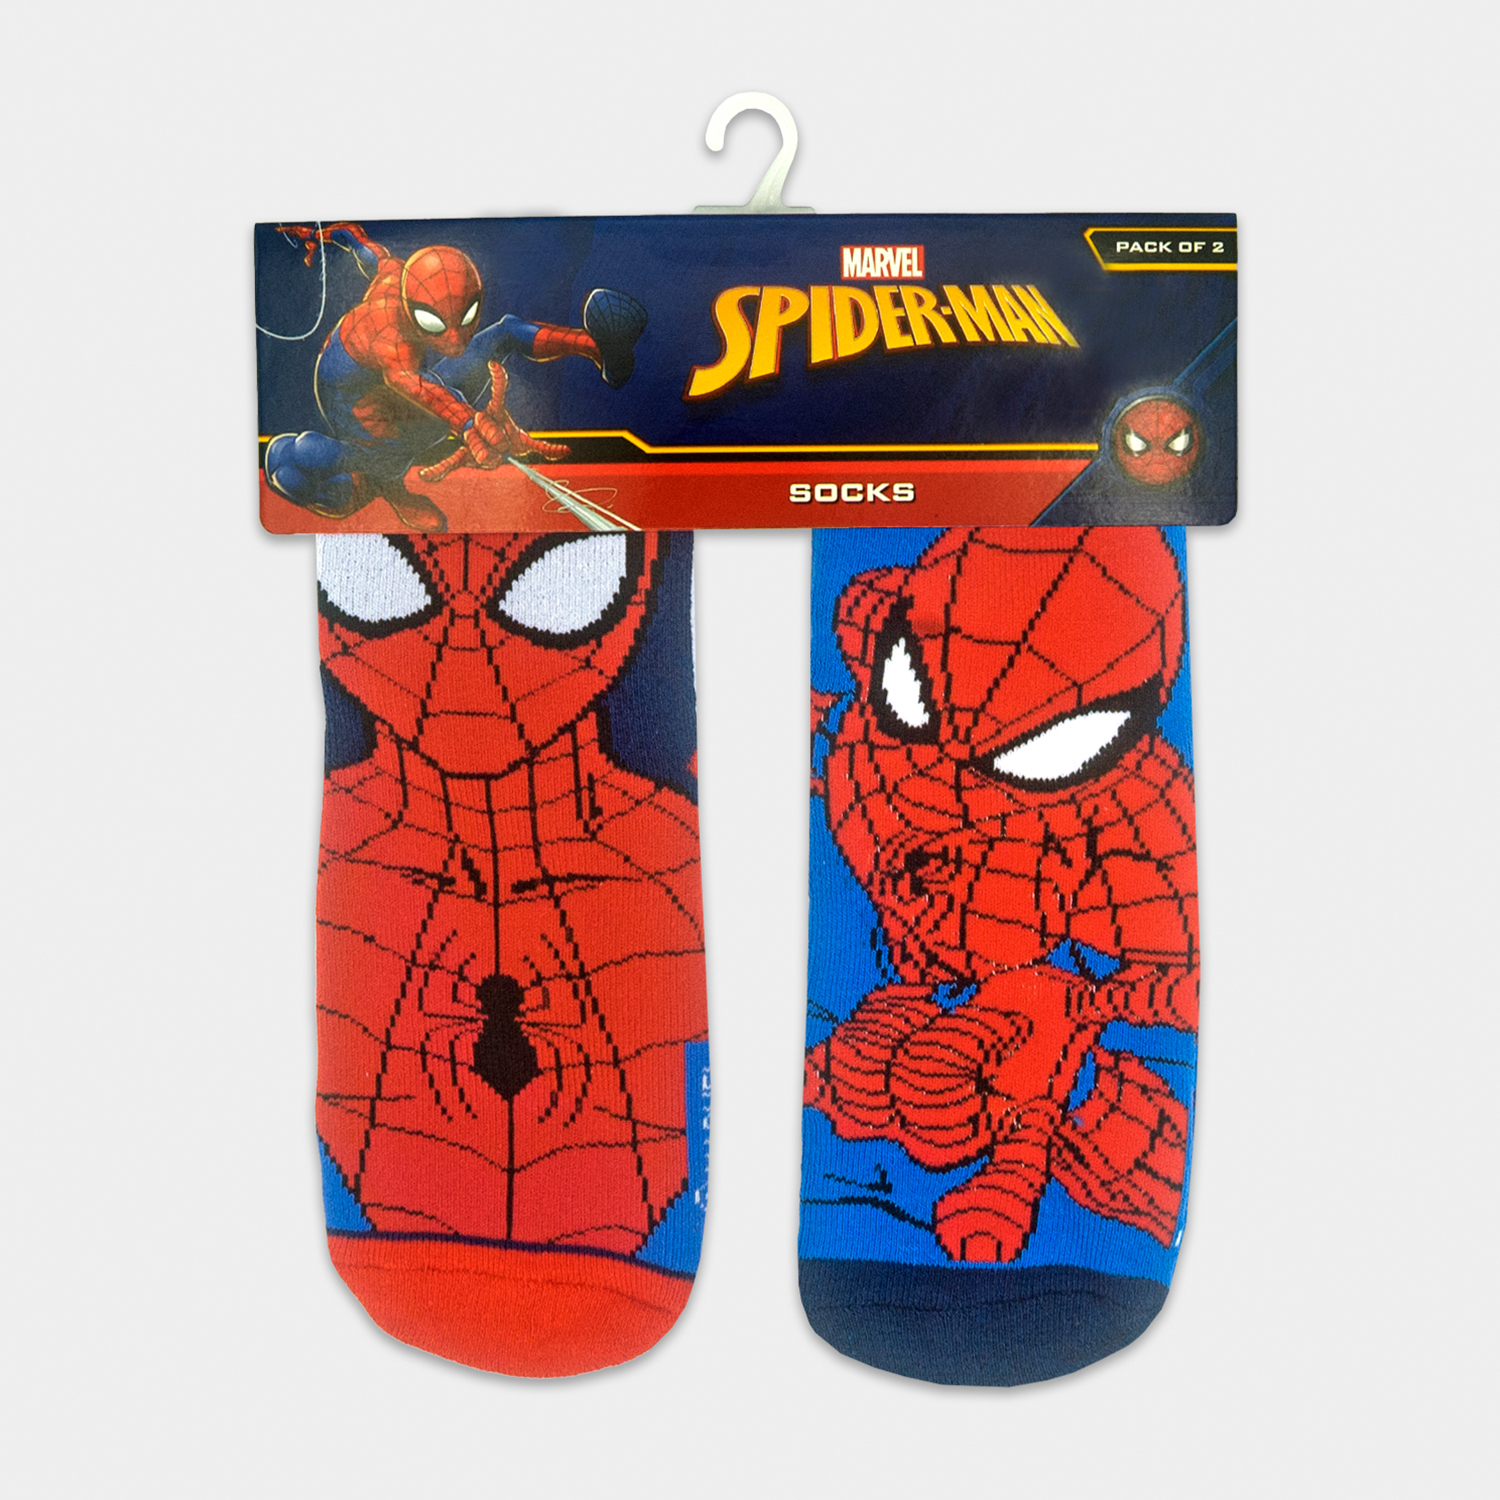 Pack de 2 calcetines antideslizantes Spiderman para niño.